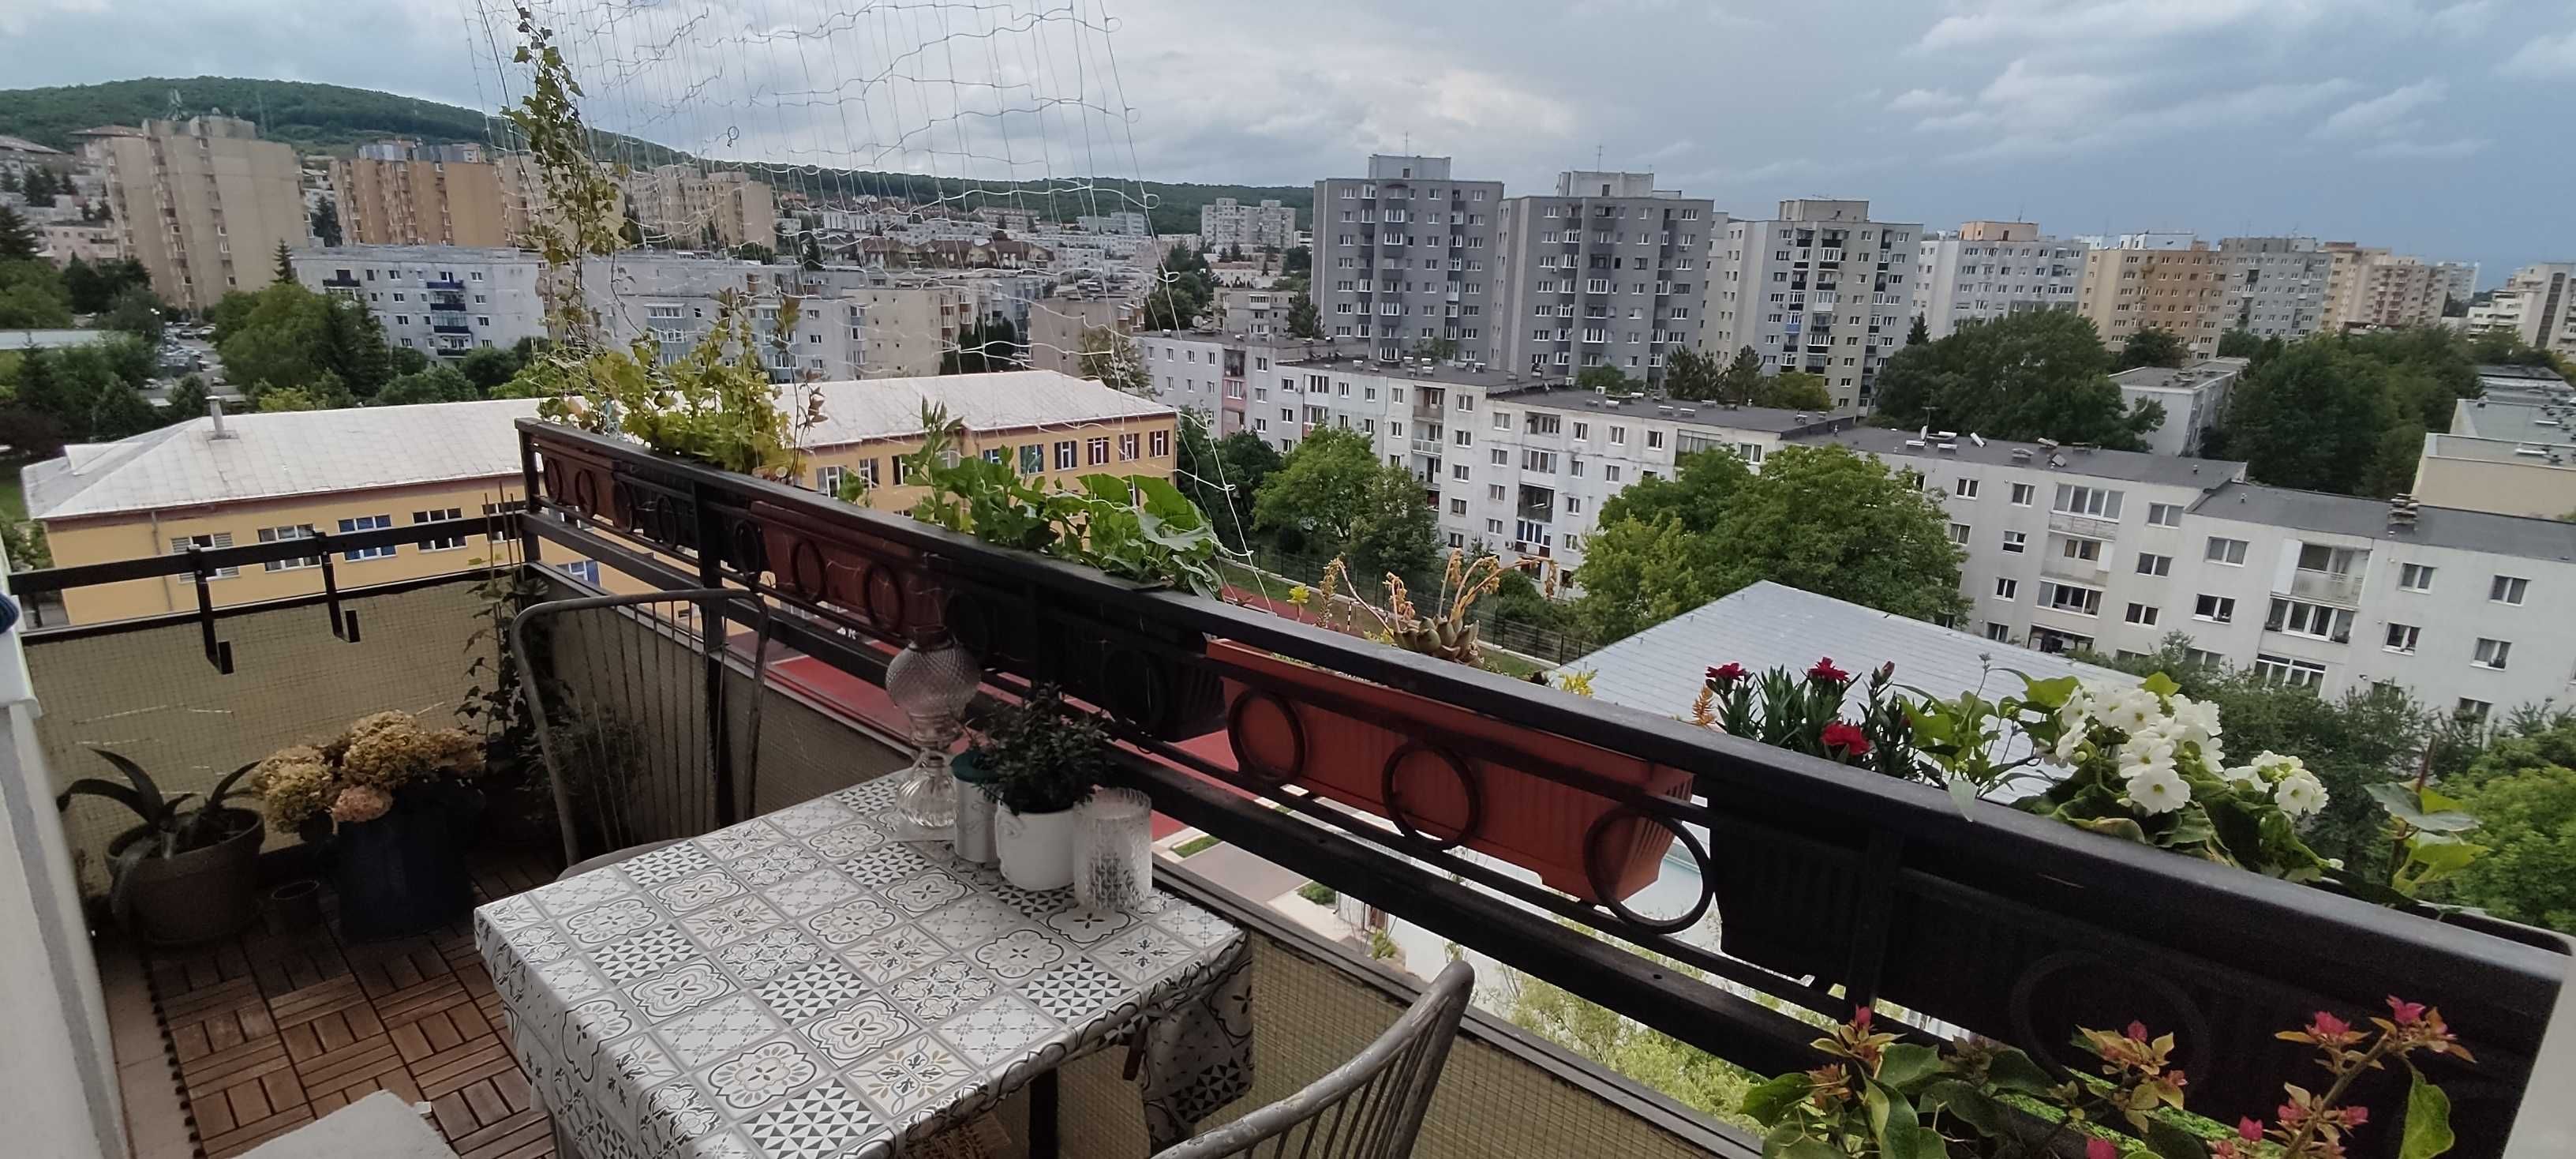 Vânzare apartament 3 camere, Mănăstur, strada Vidraru